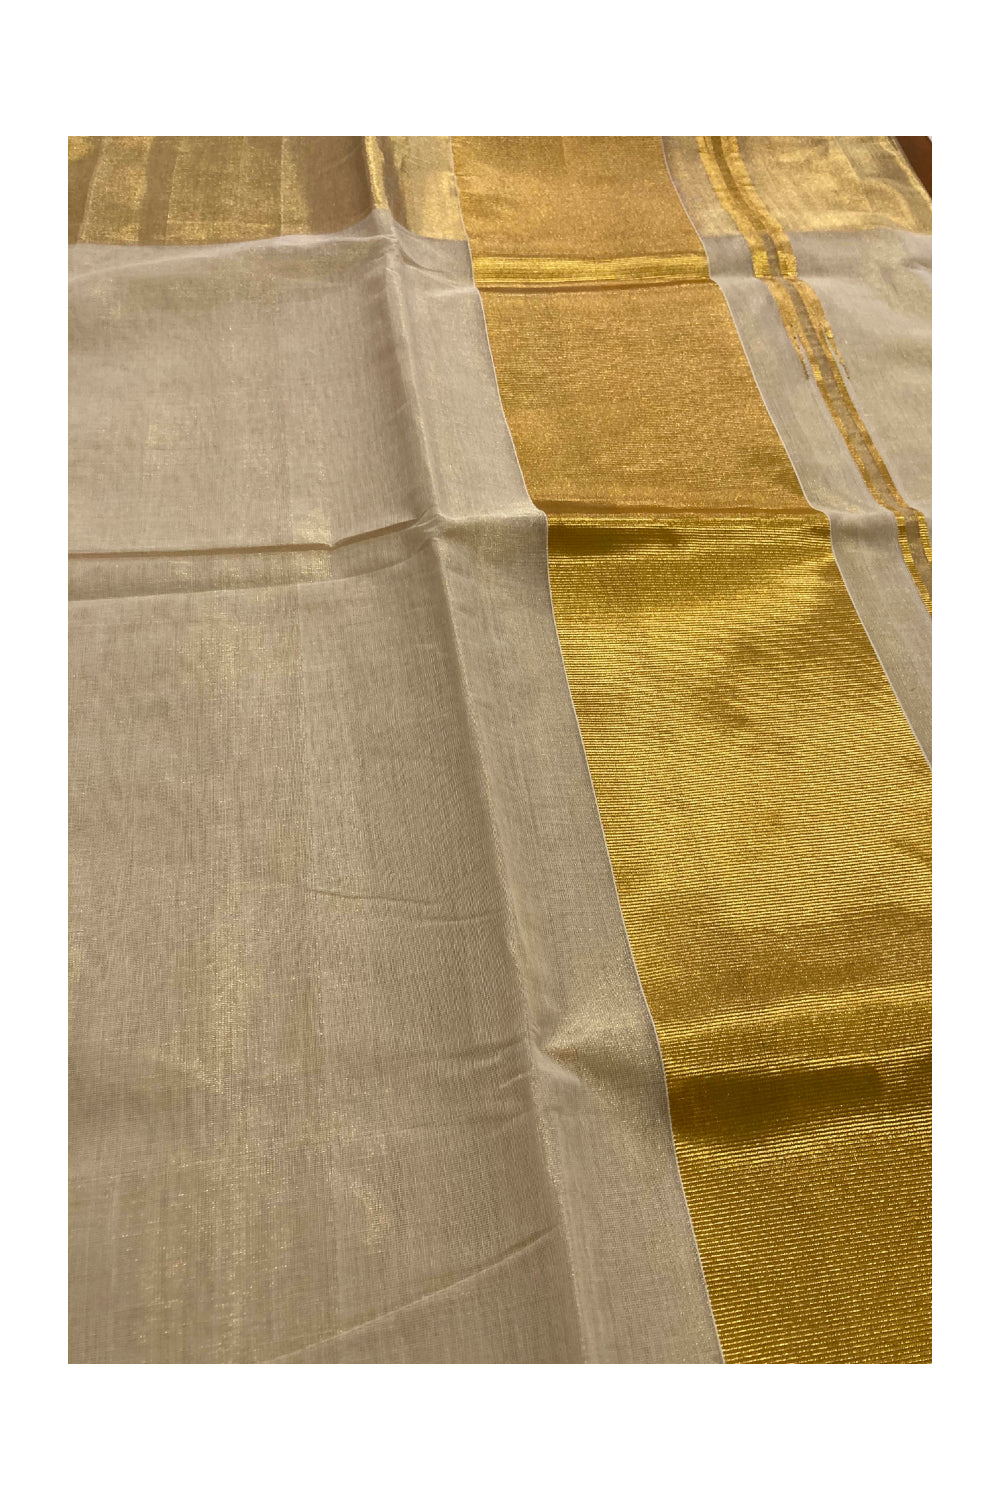 Southloom Premium Handloom Tissue Kasavu Saree with 5 inch Border